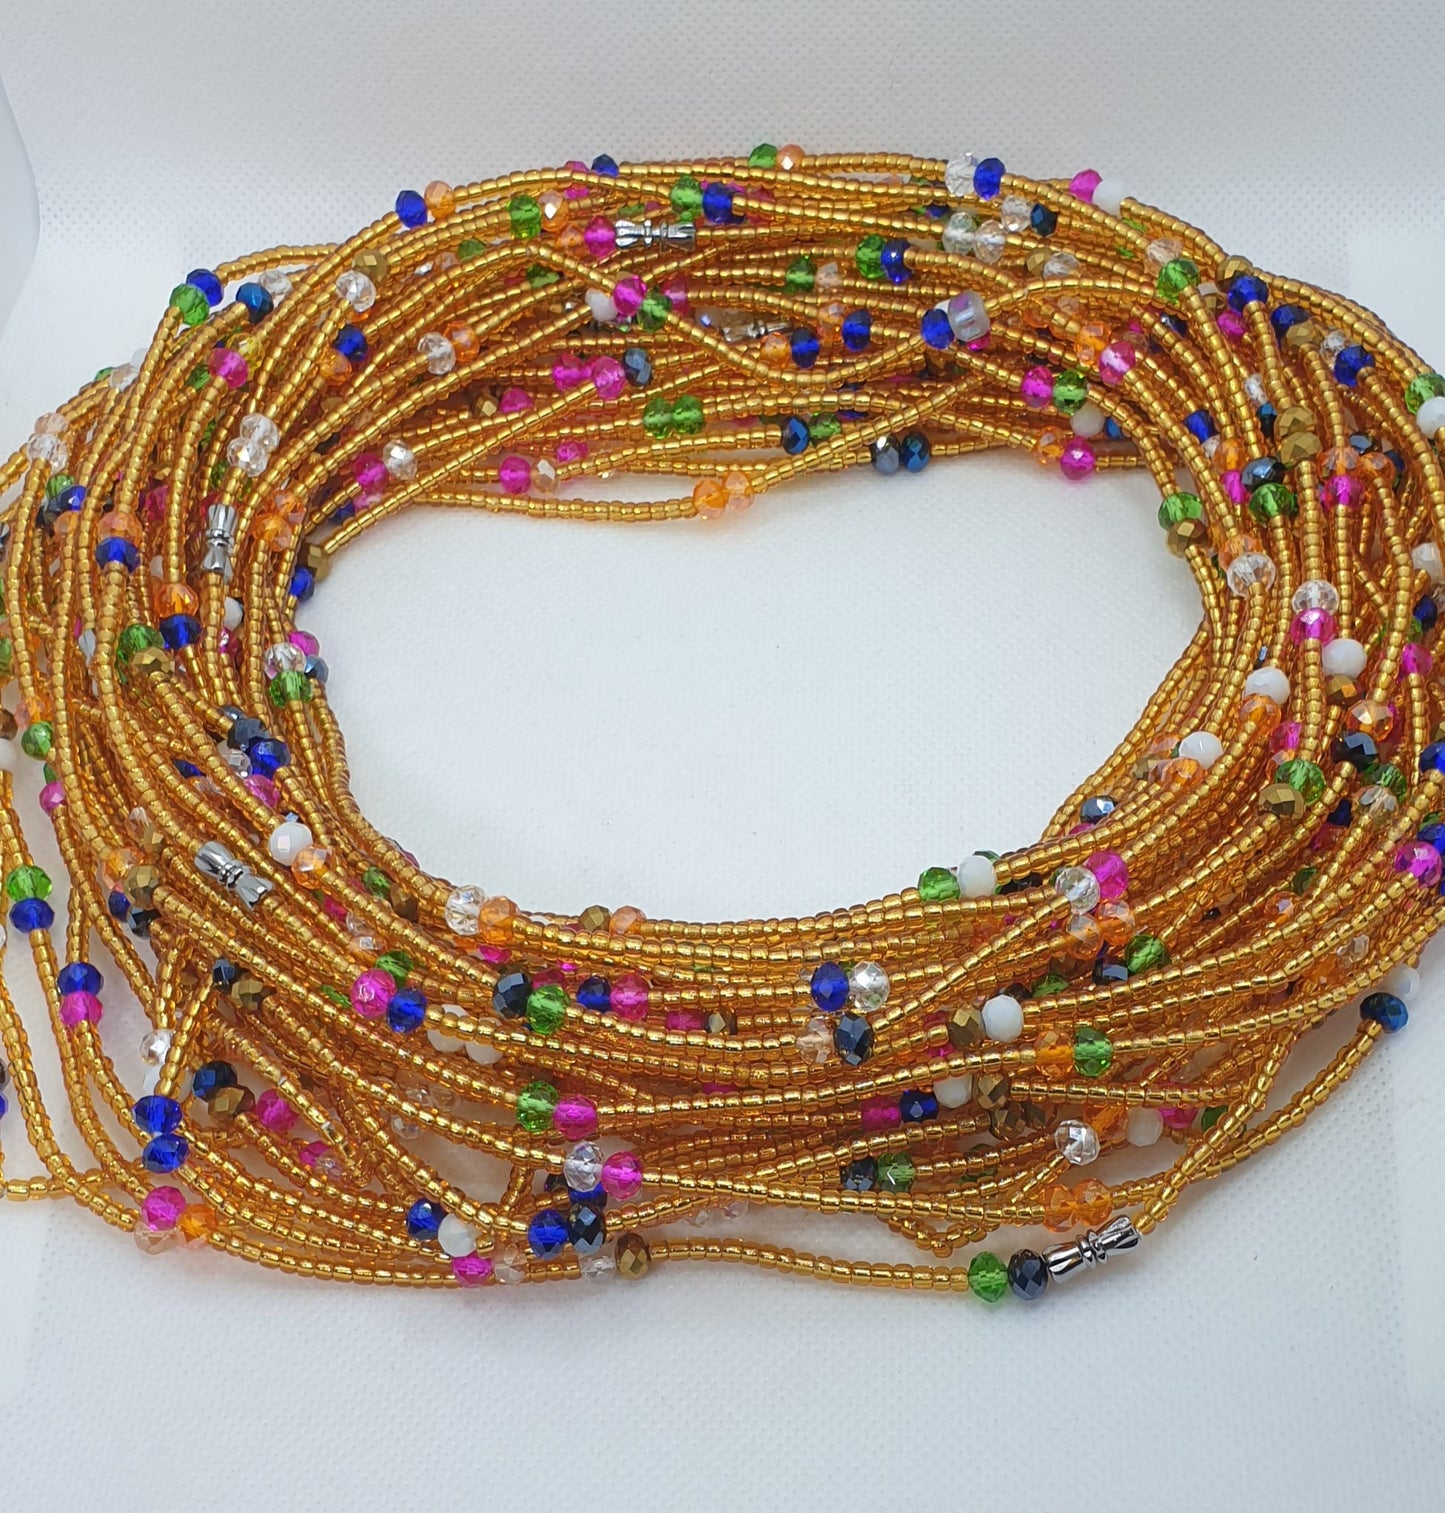 Gold Waist Bead|Belly Chain|weight loss beads|Weight control beads|African Waist bead|Multi coloured African waist Beads! On sales.